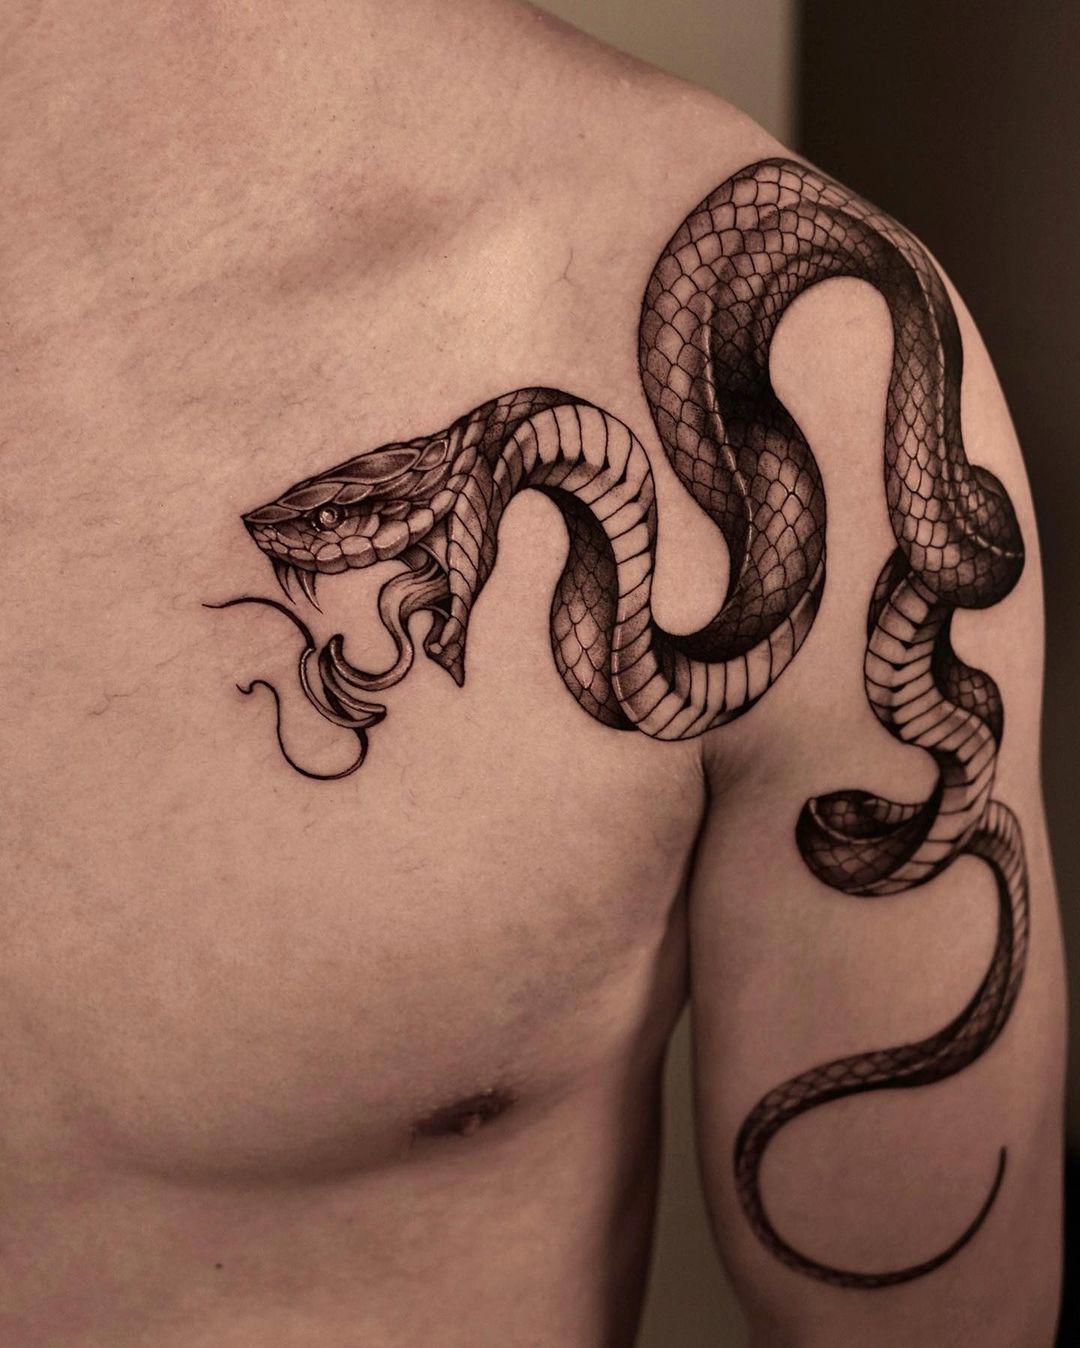 Tatuaje de serpiente hombre